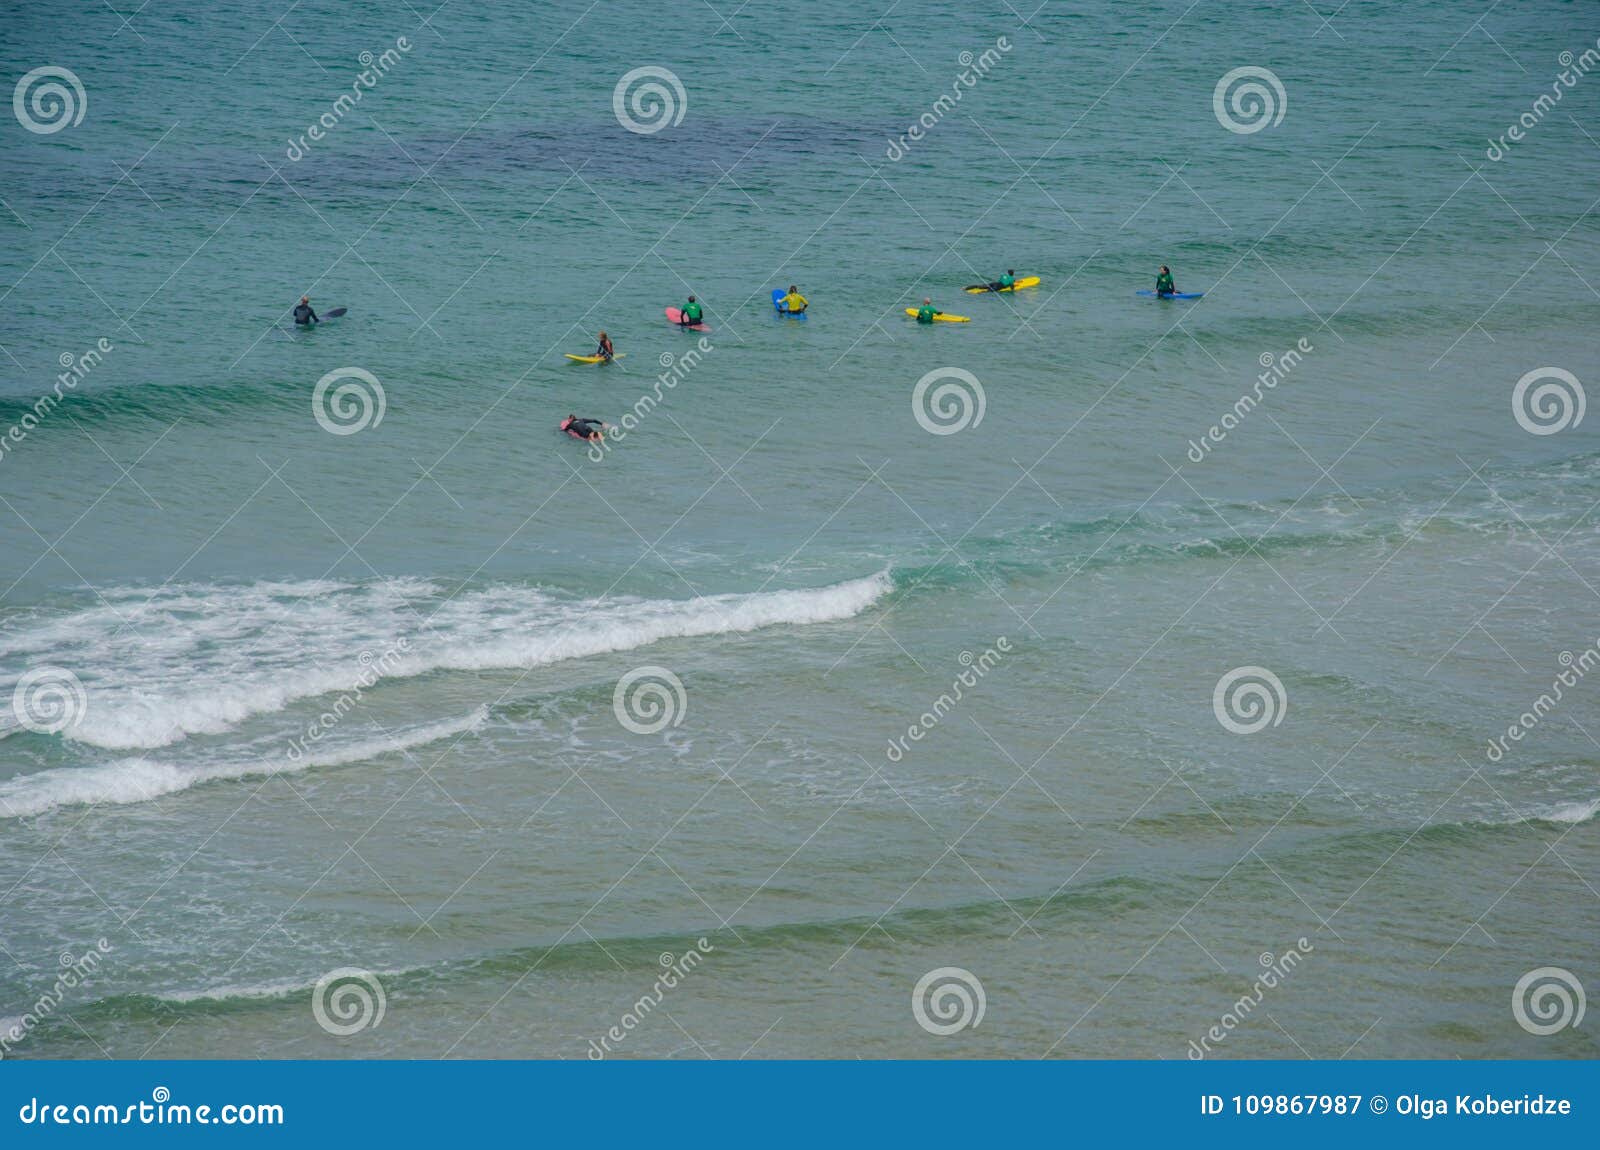 surfing lesson in adegas beach near carrapateira, portugal.